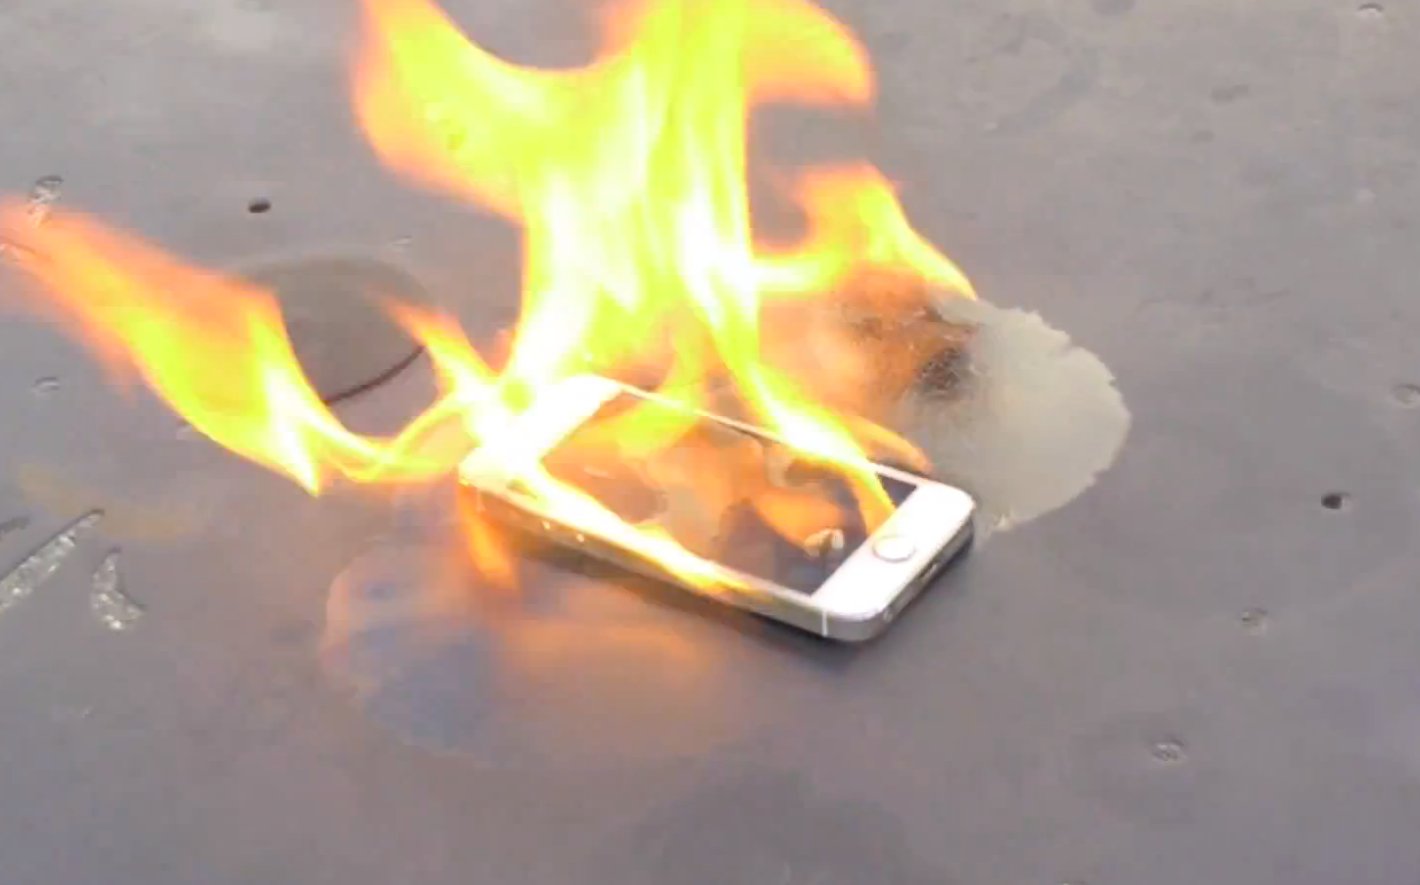 iPad Air Explosion im Vodafone Shop, brennendes iPhone 5s gold im Video! 1